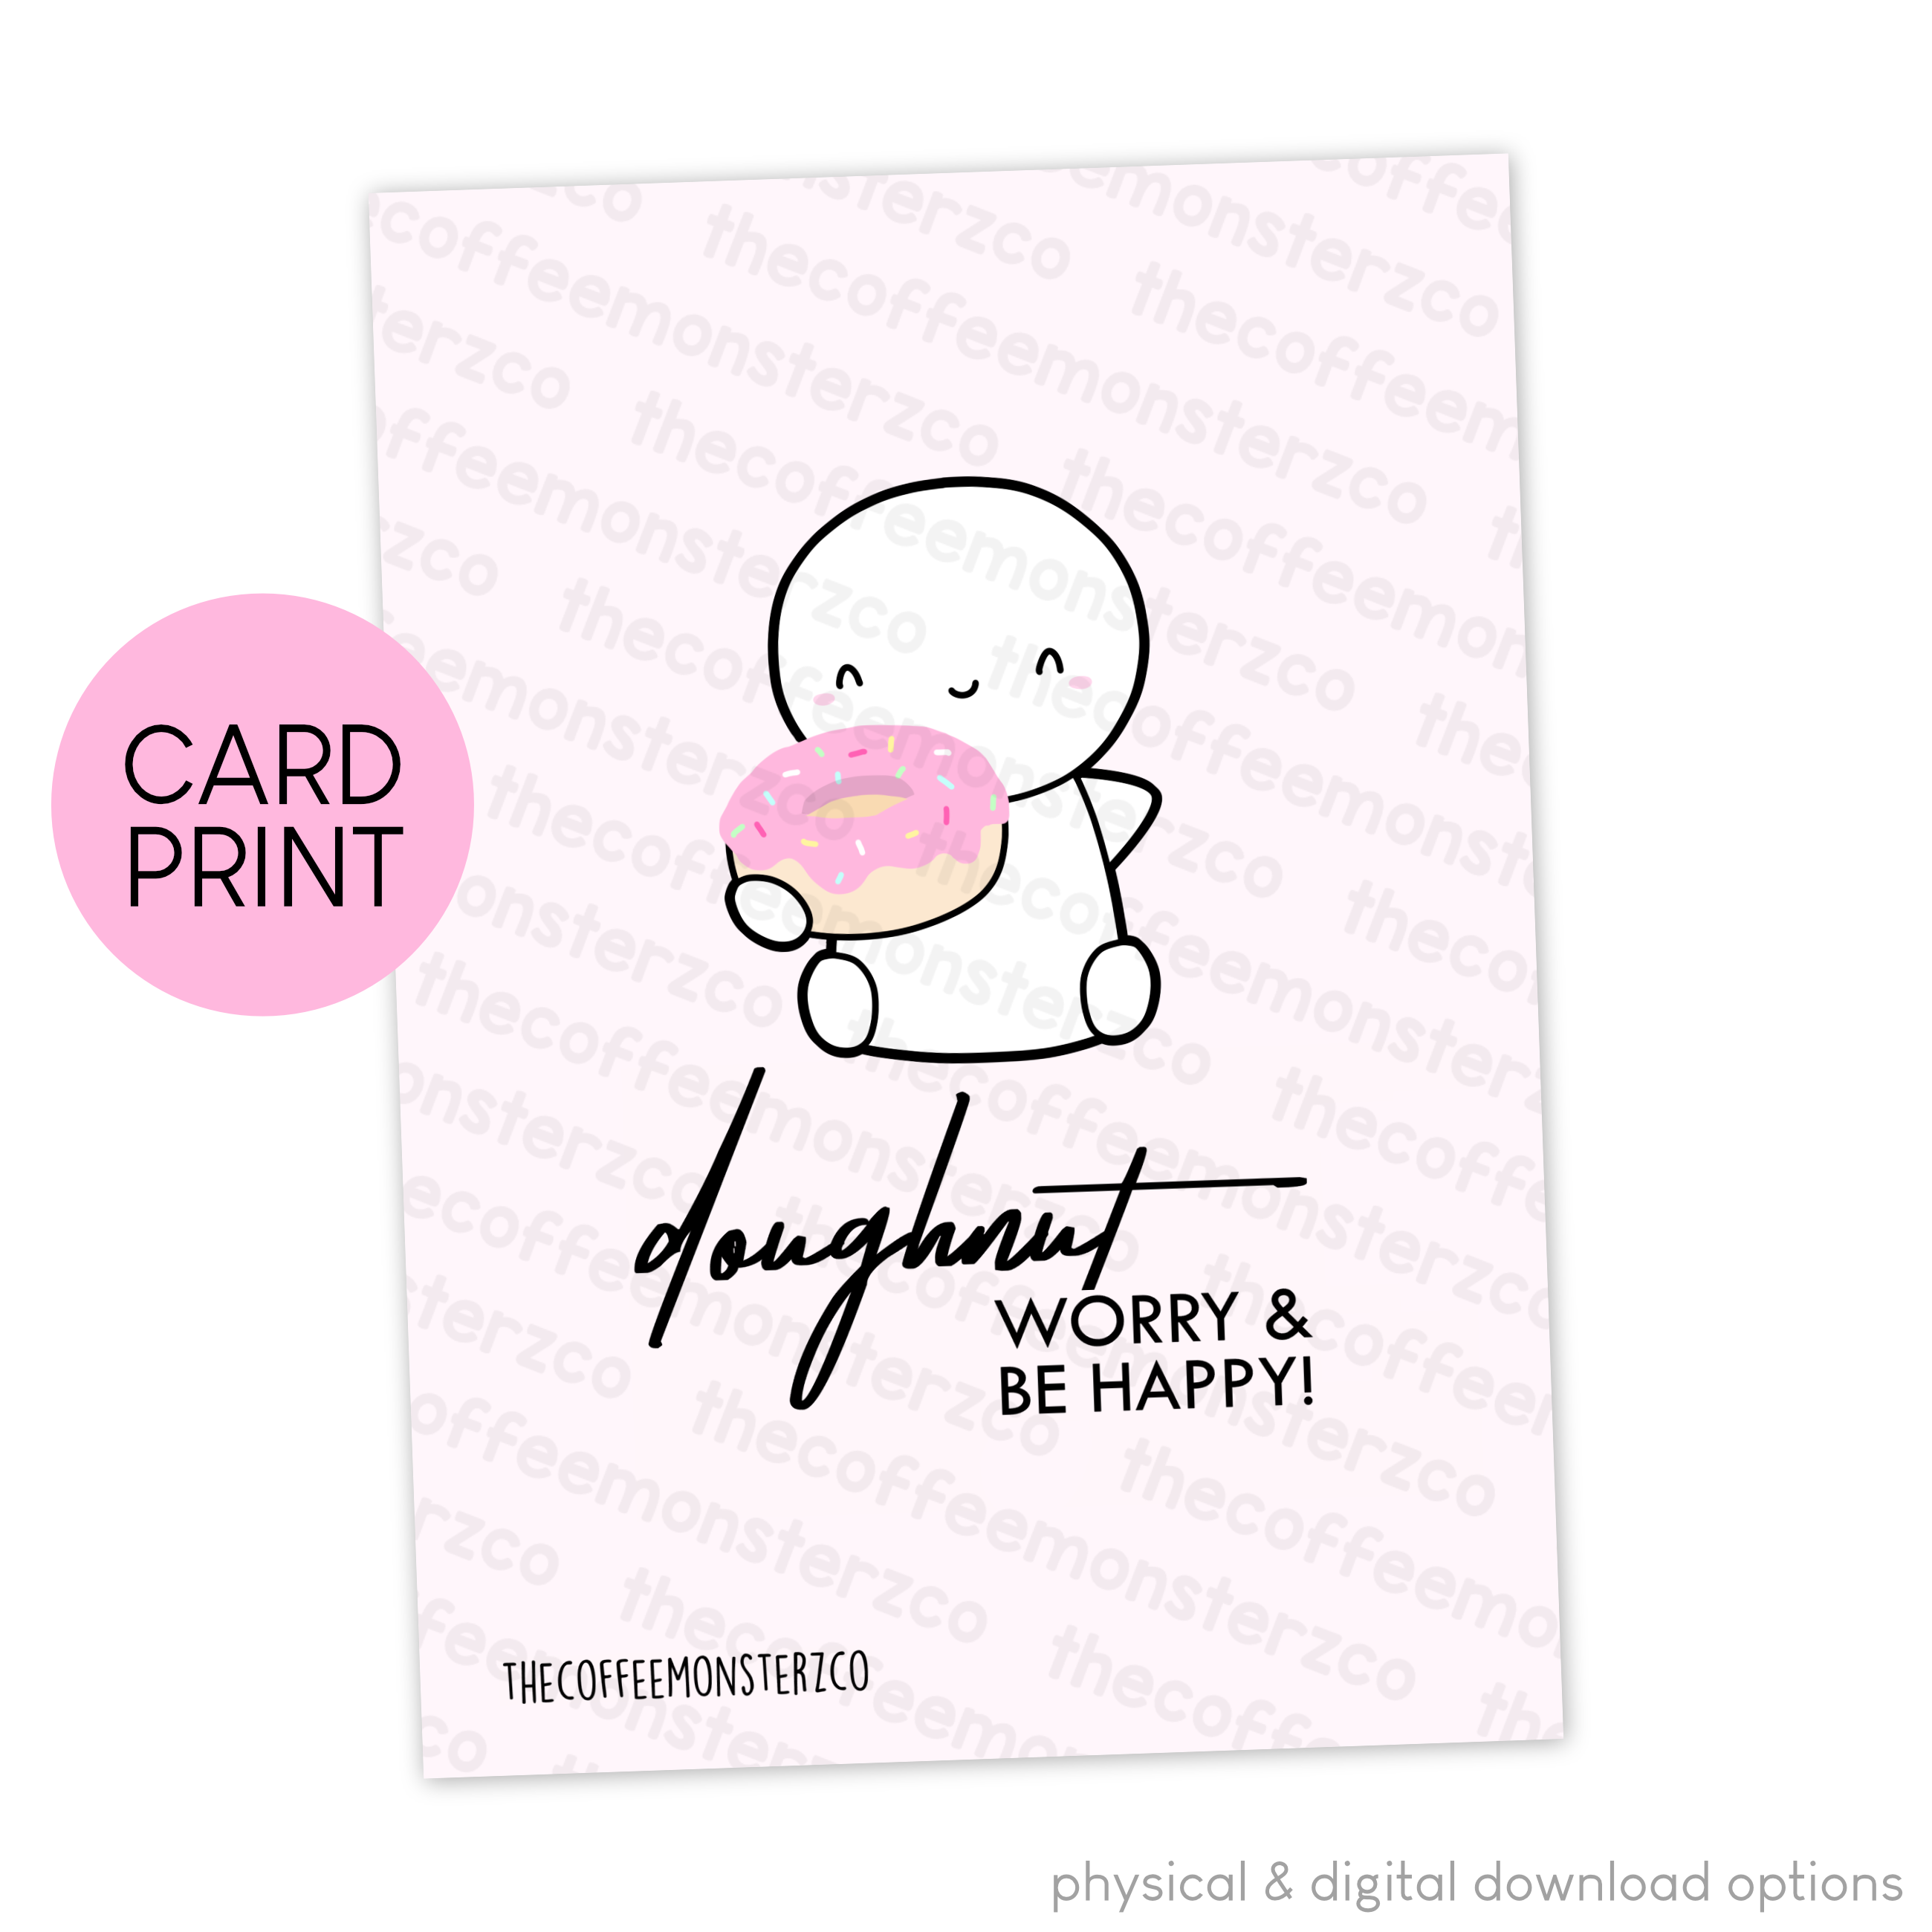 Doughnut Worry - Card Print